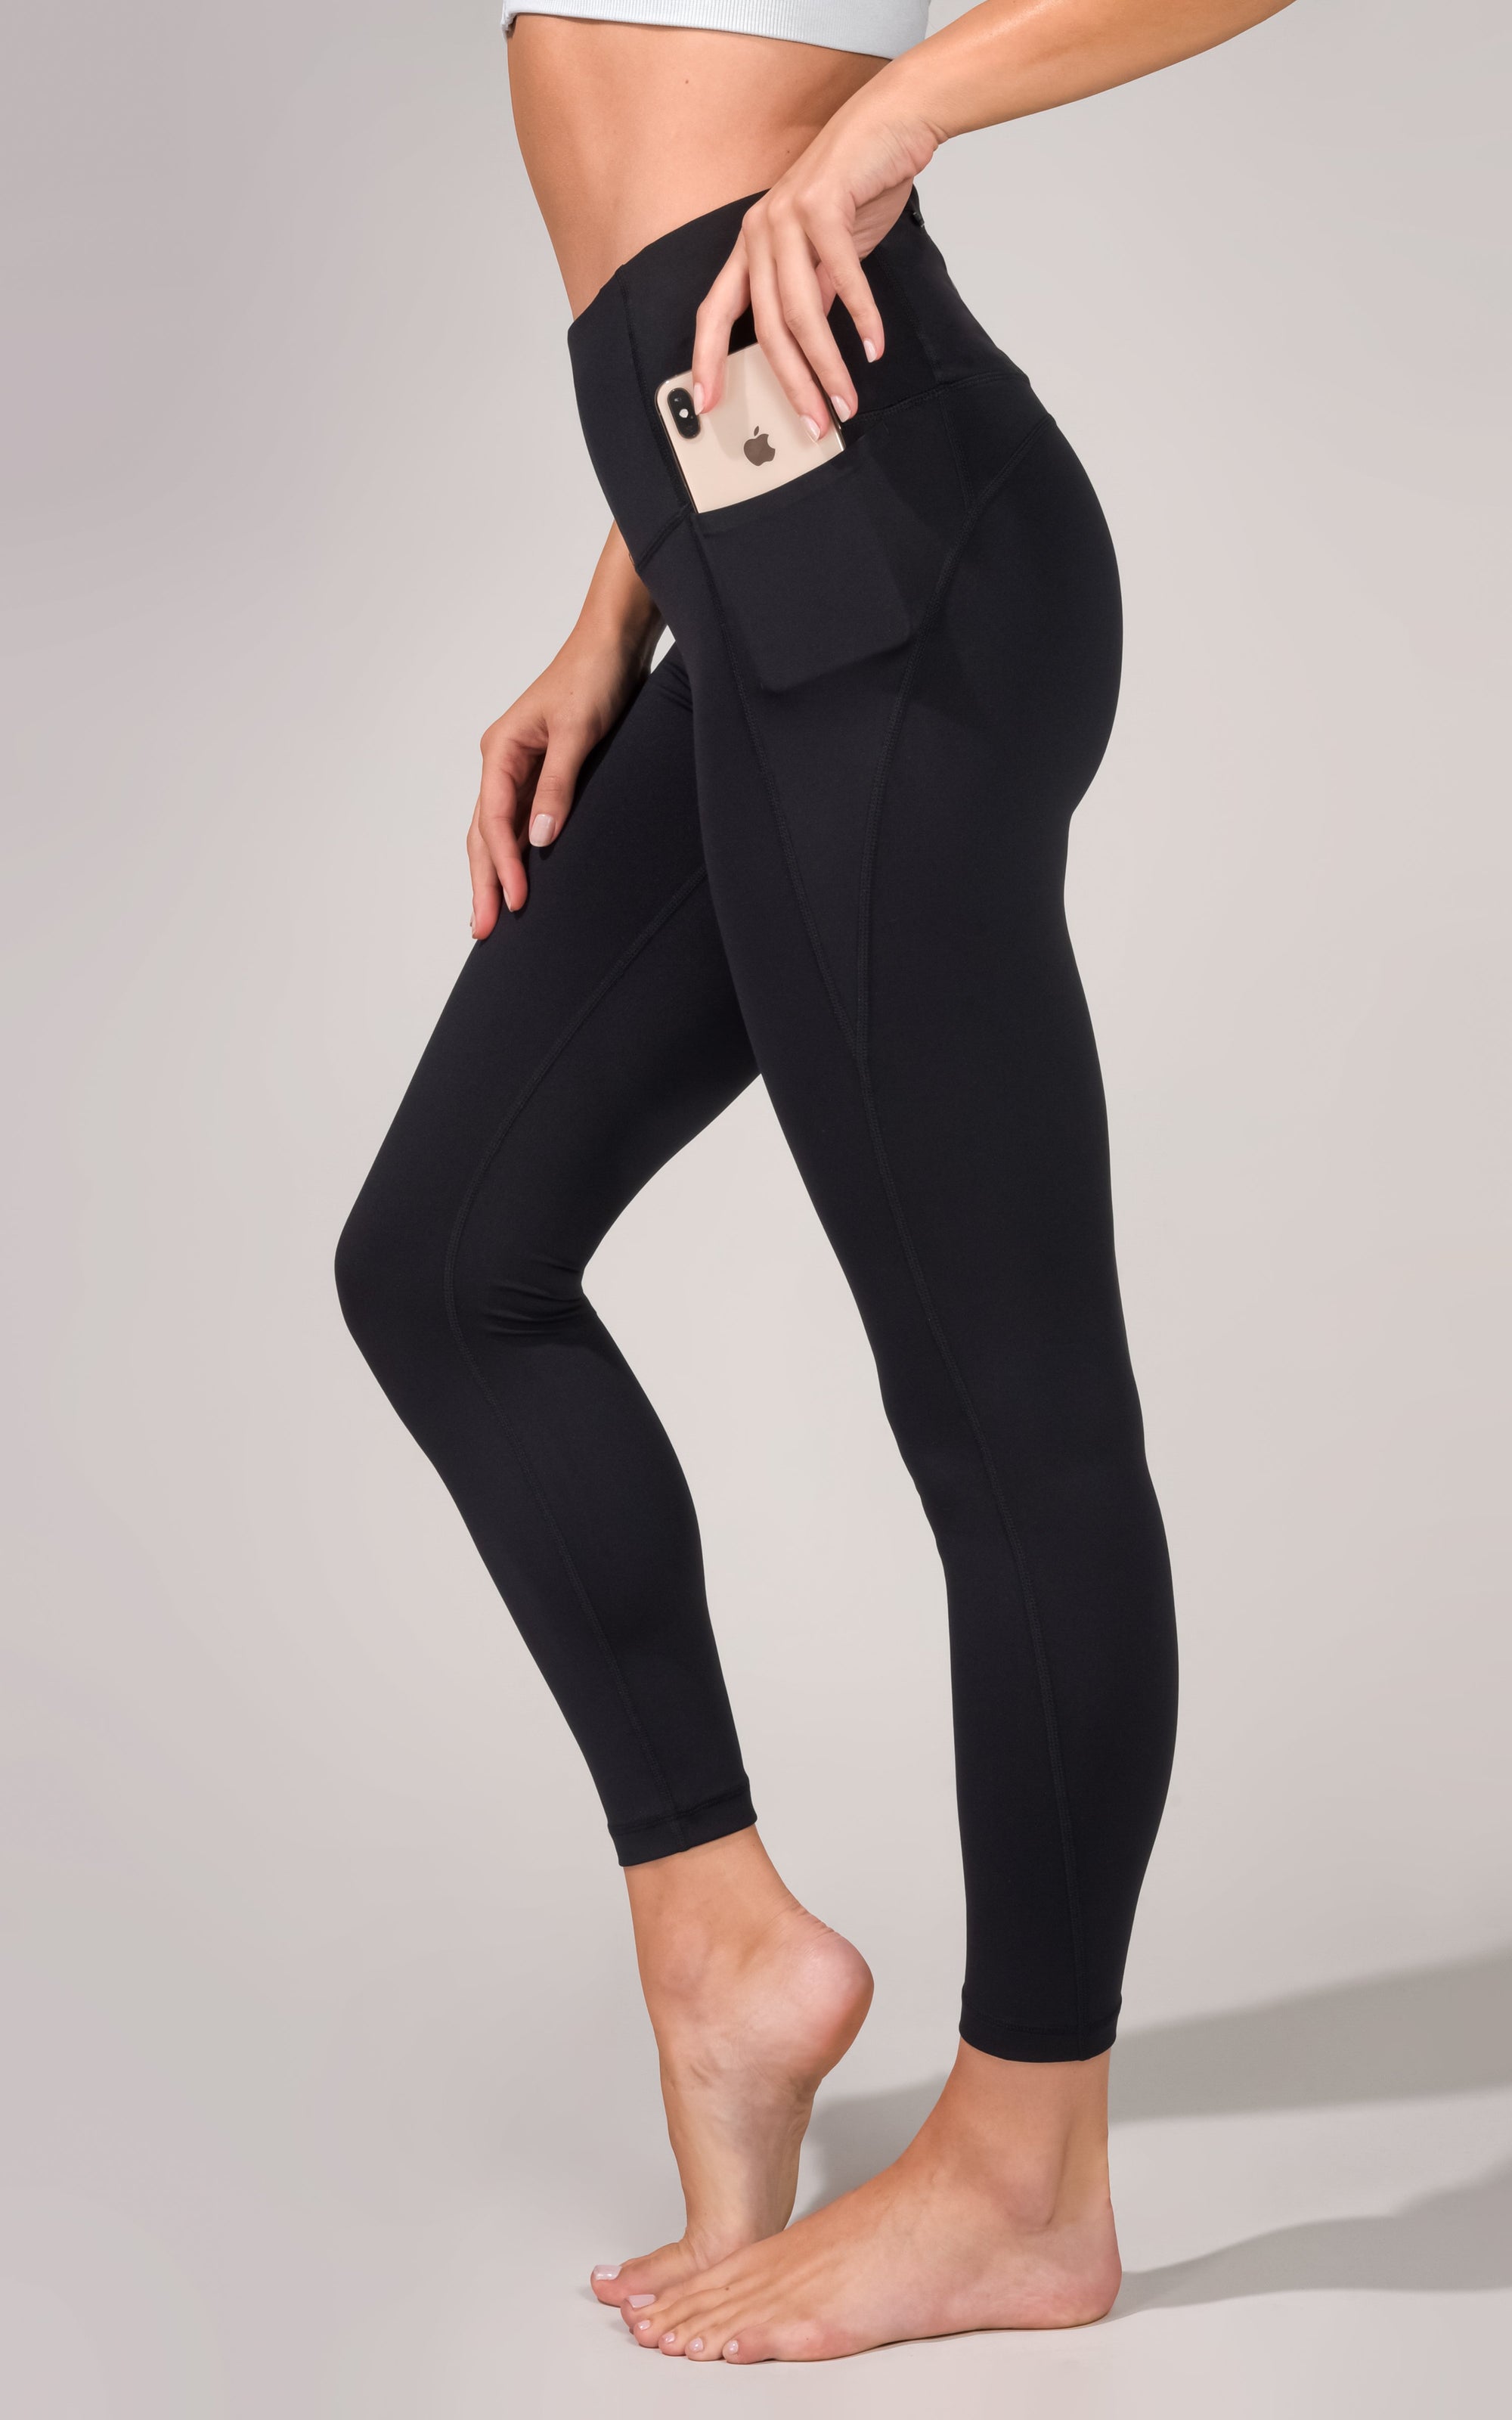 $78 Yogalicious Lux Women's Ankle Length Leggings Black Pockets NWT Size XL